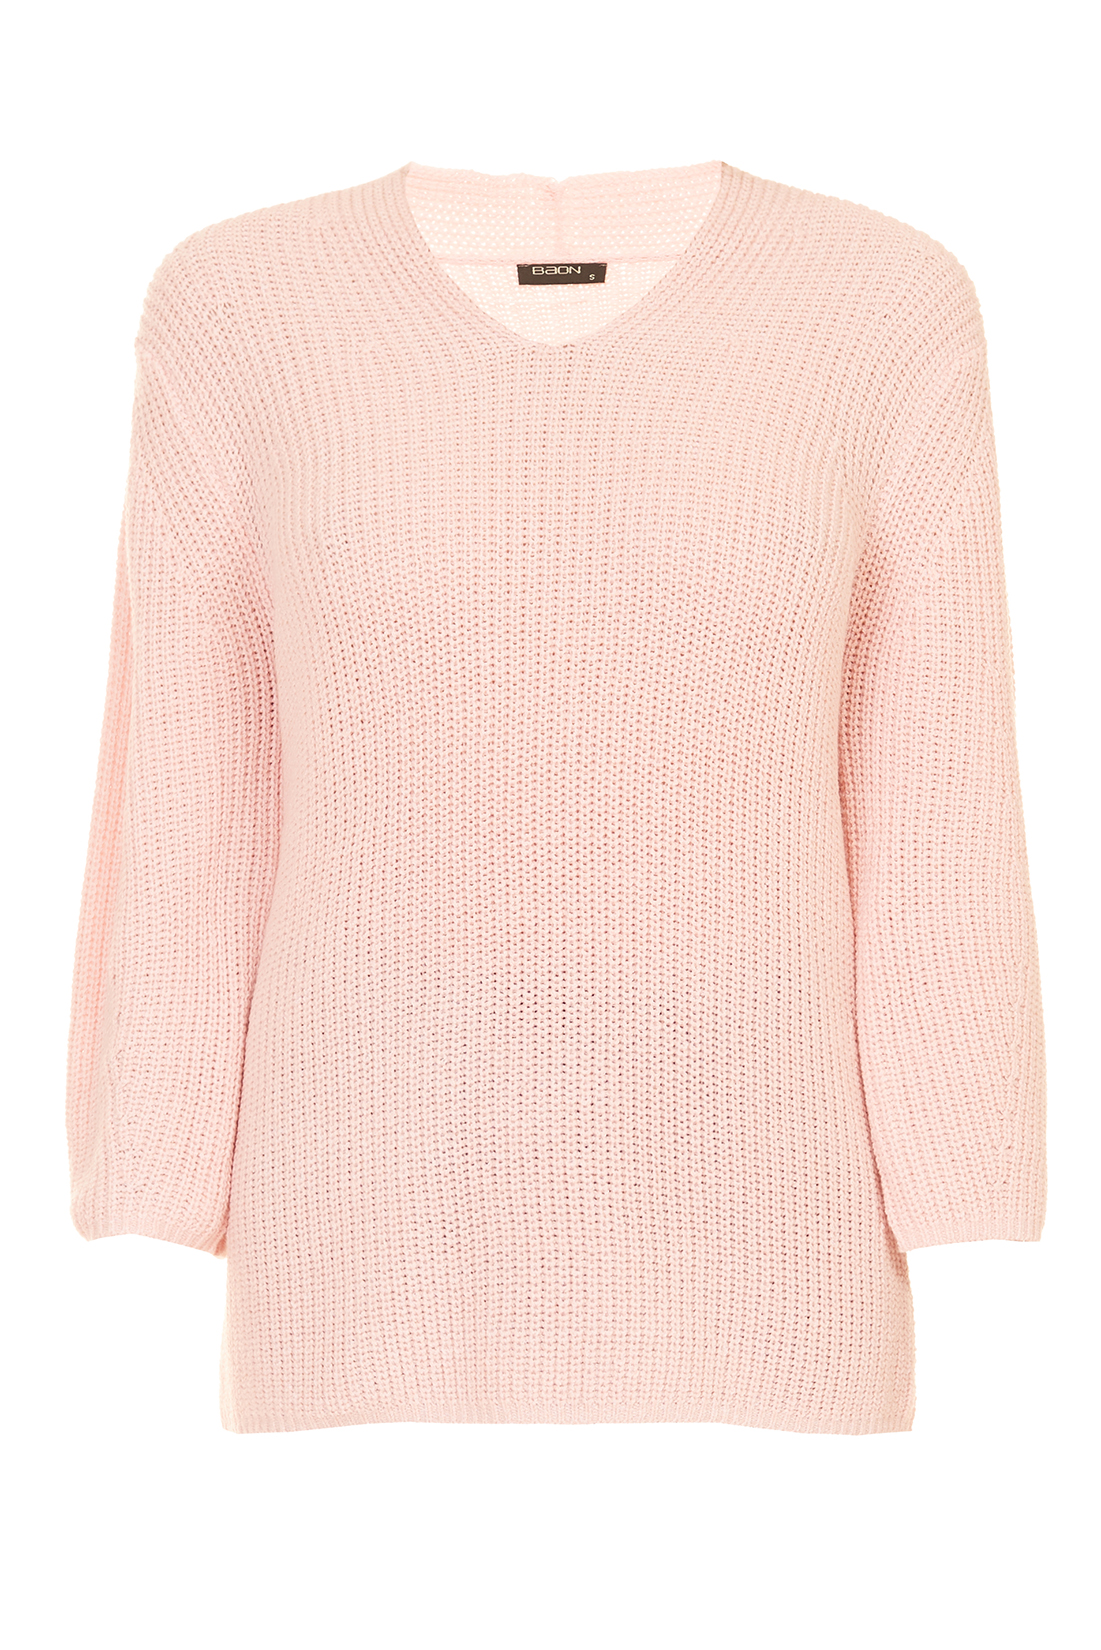 Пуловер оригинального кроя (арт. baon B137504), размер XXL, цвет розовый Пуловер оригинального кроя (арт. baon B137504) - фото 3